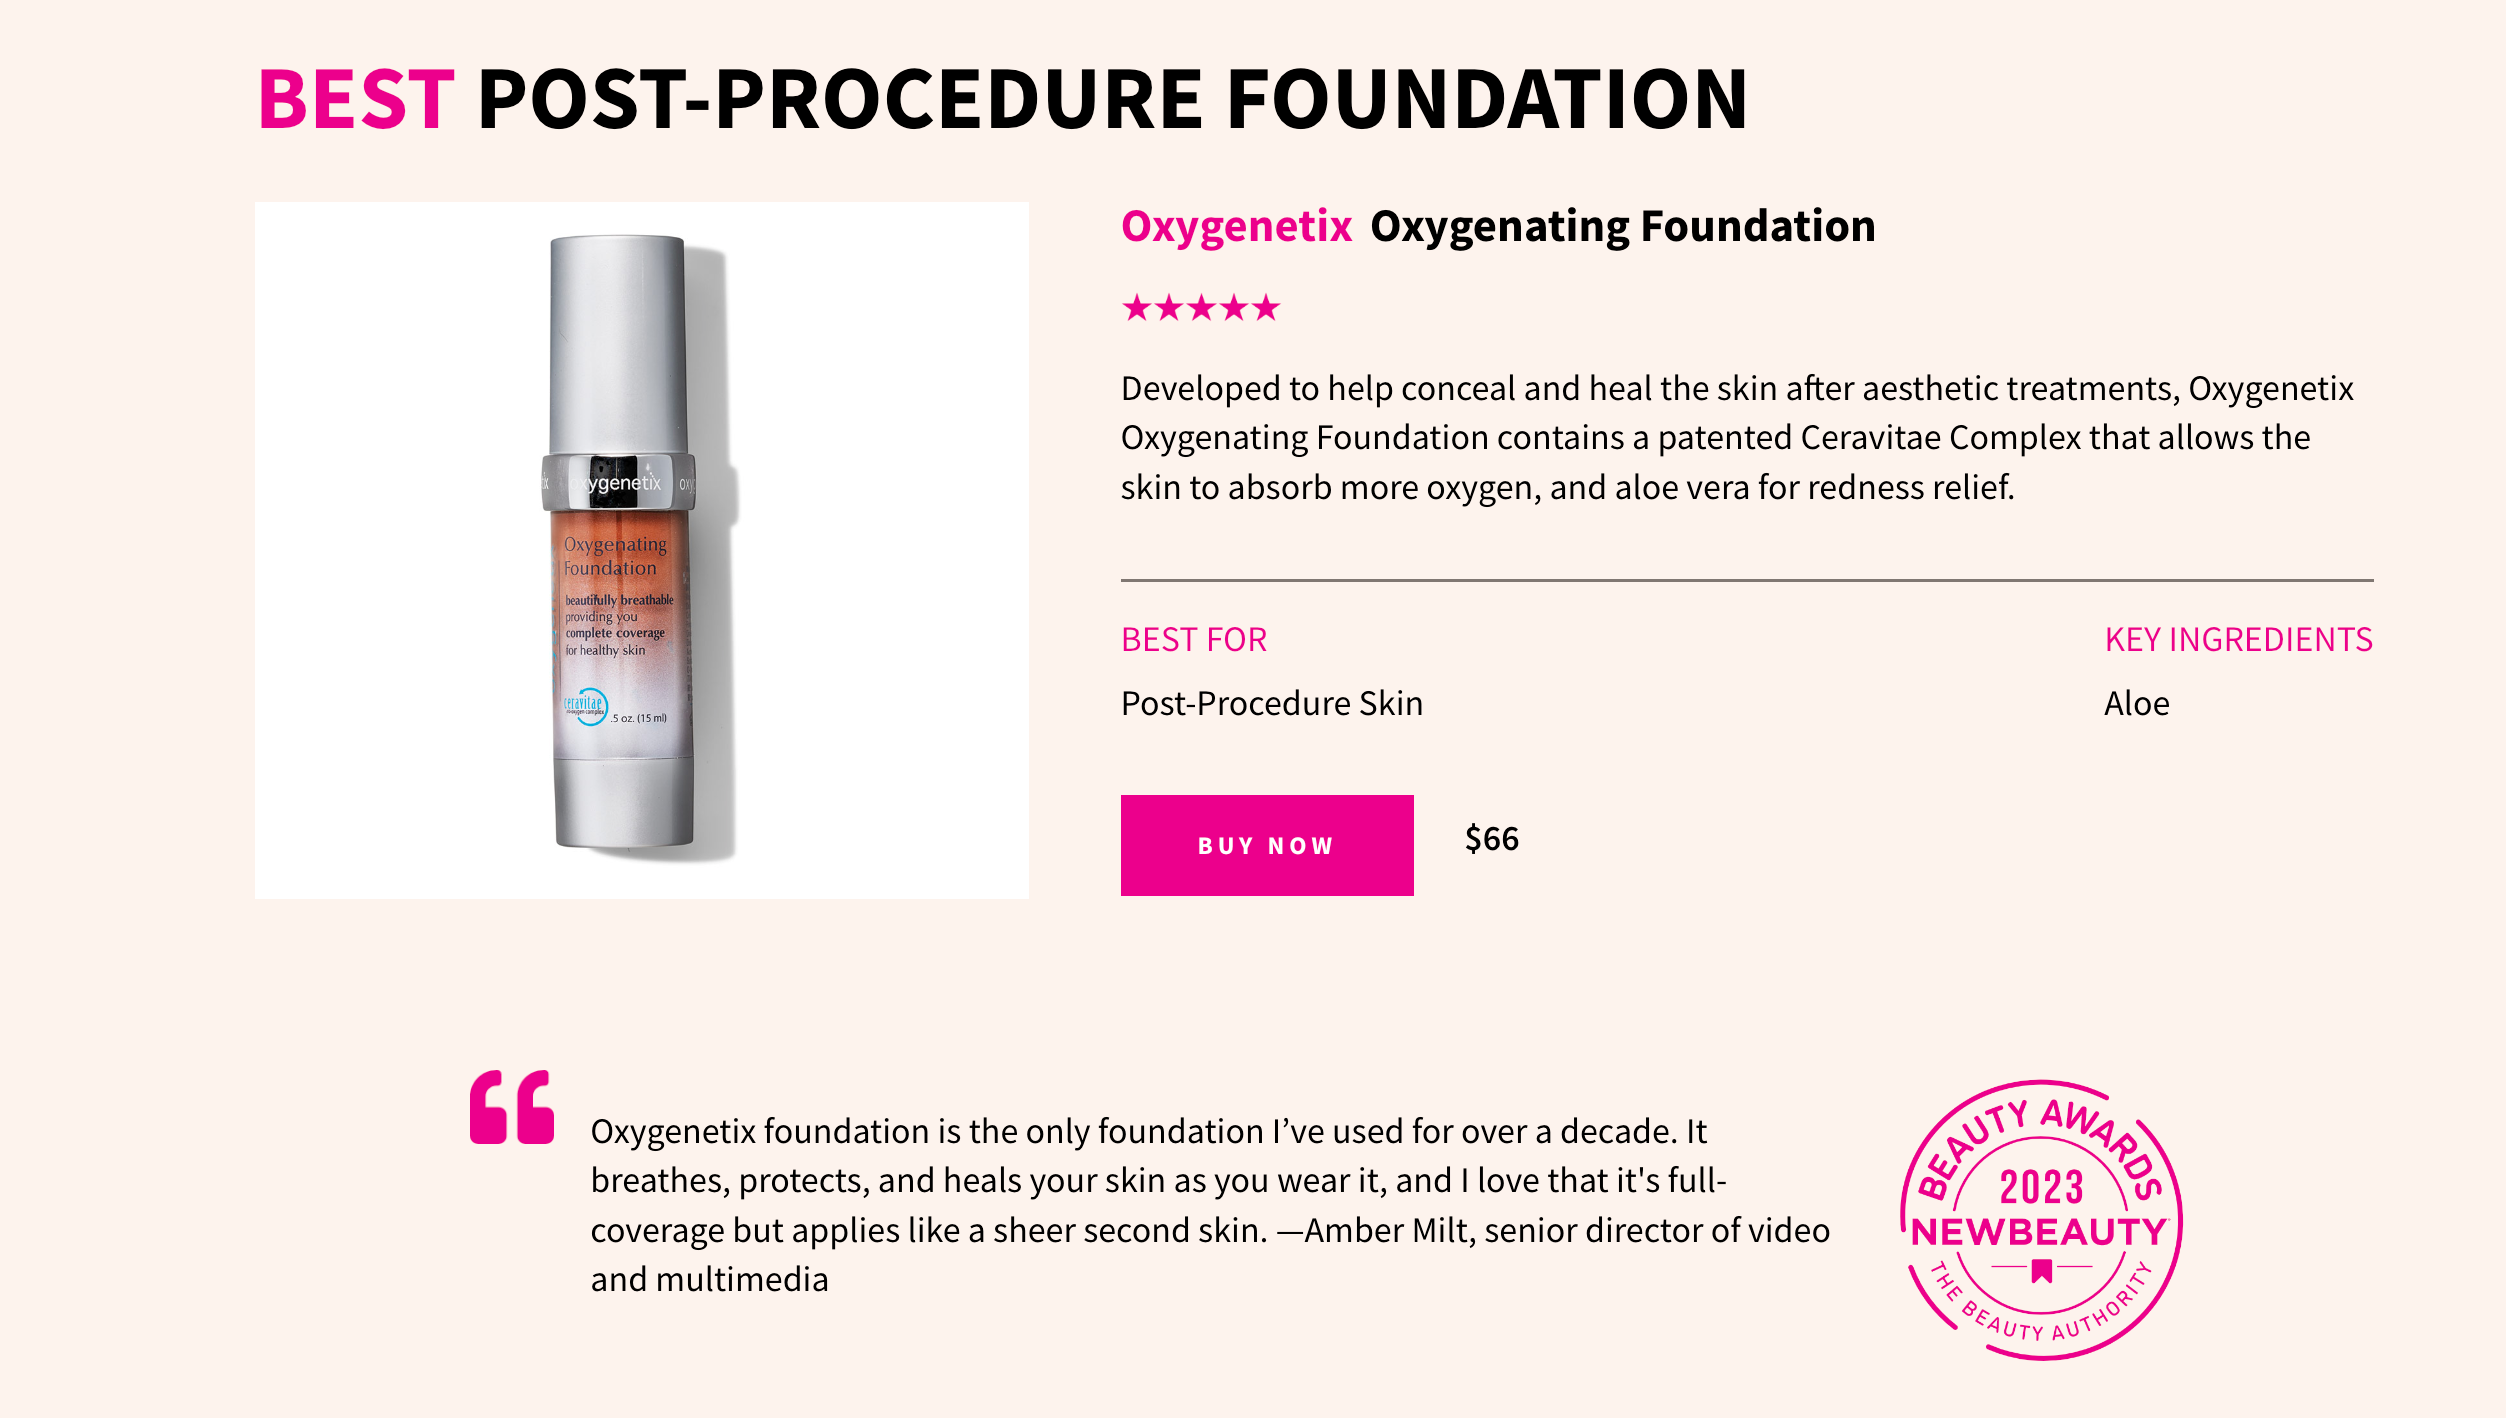 New Beauty Awards - Best Post Procedure Foundation: Oxygenetix Oxygenating Foundation